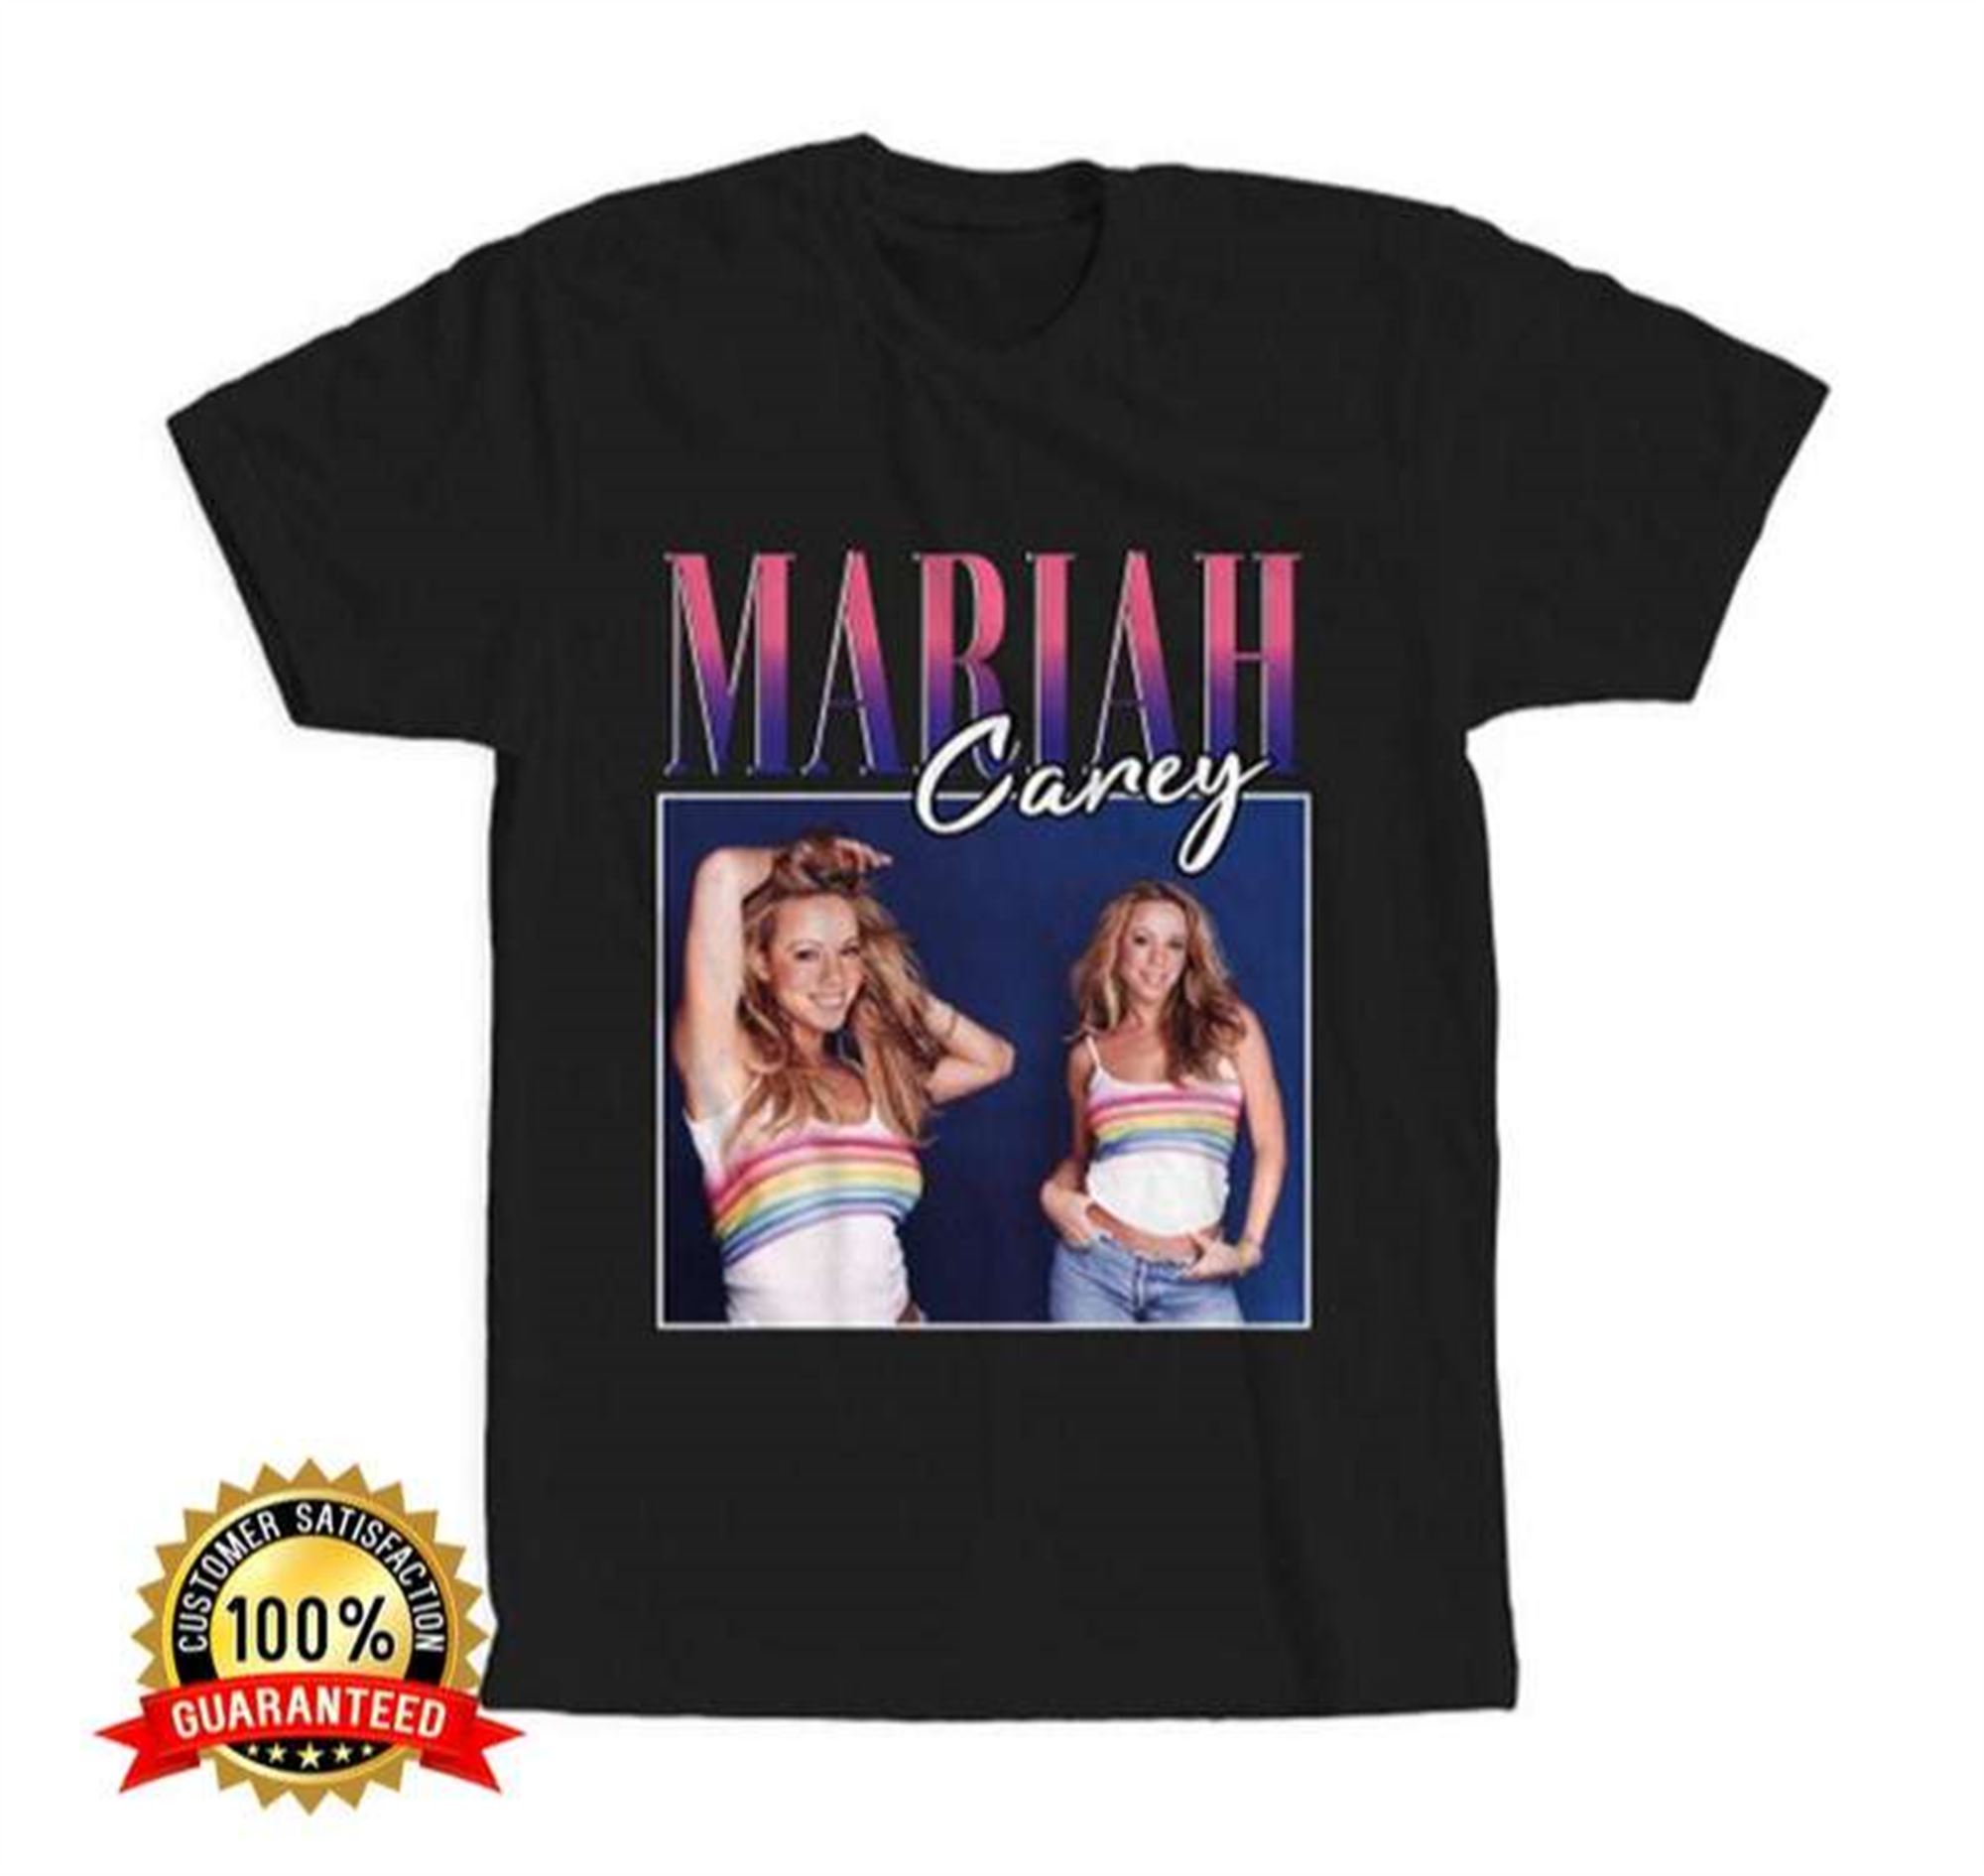 Mariah Carey Vintage Pop Star T Shirt Size Up To 5xl